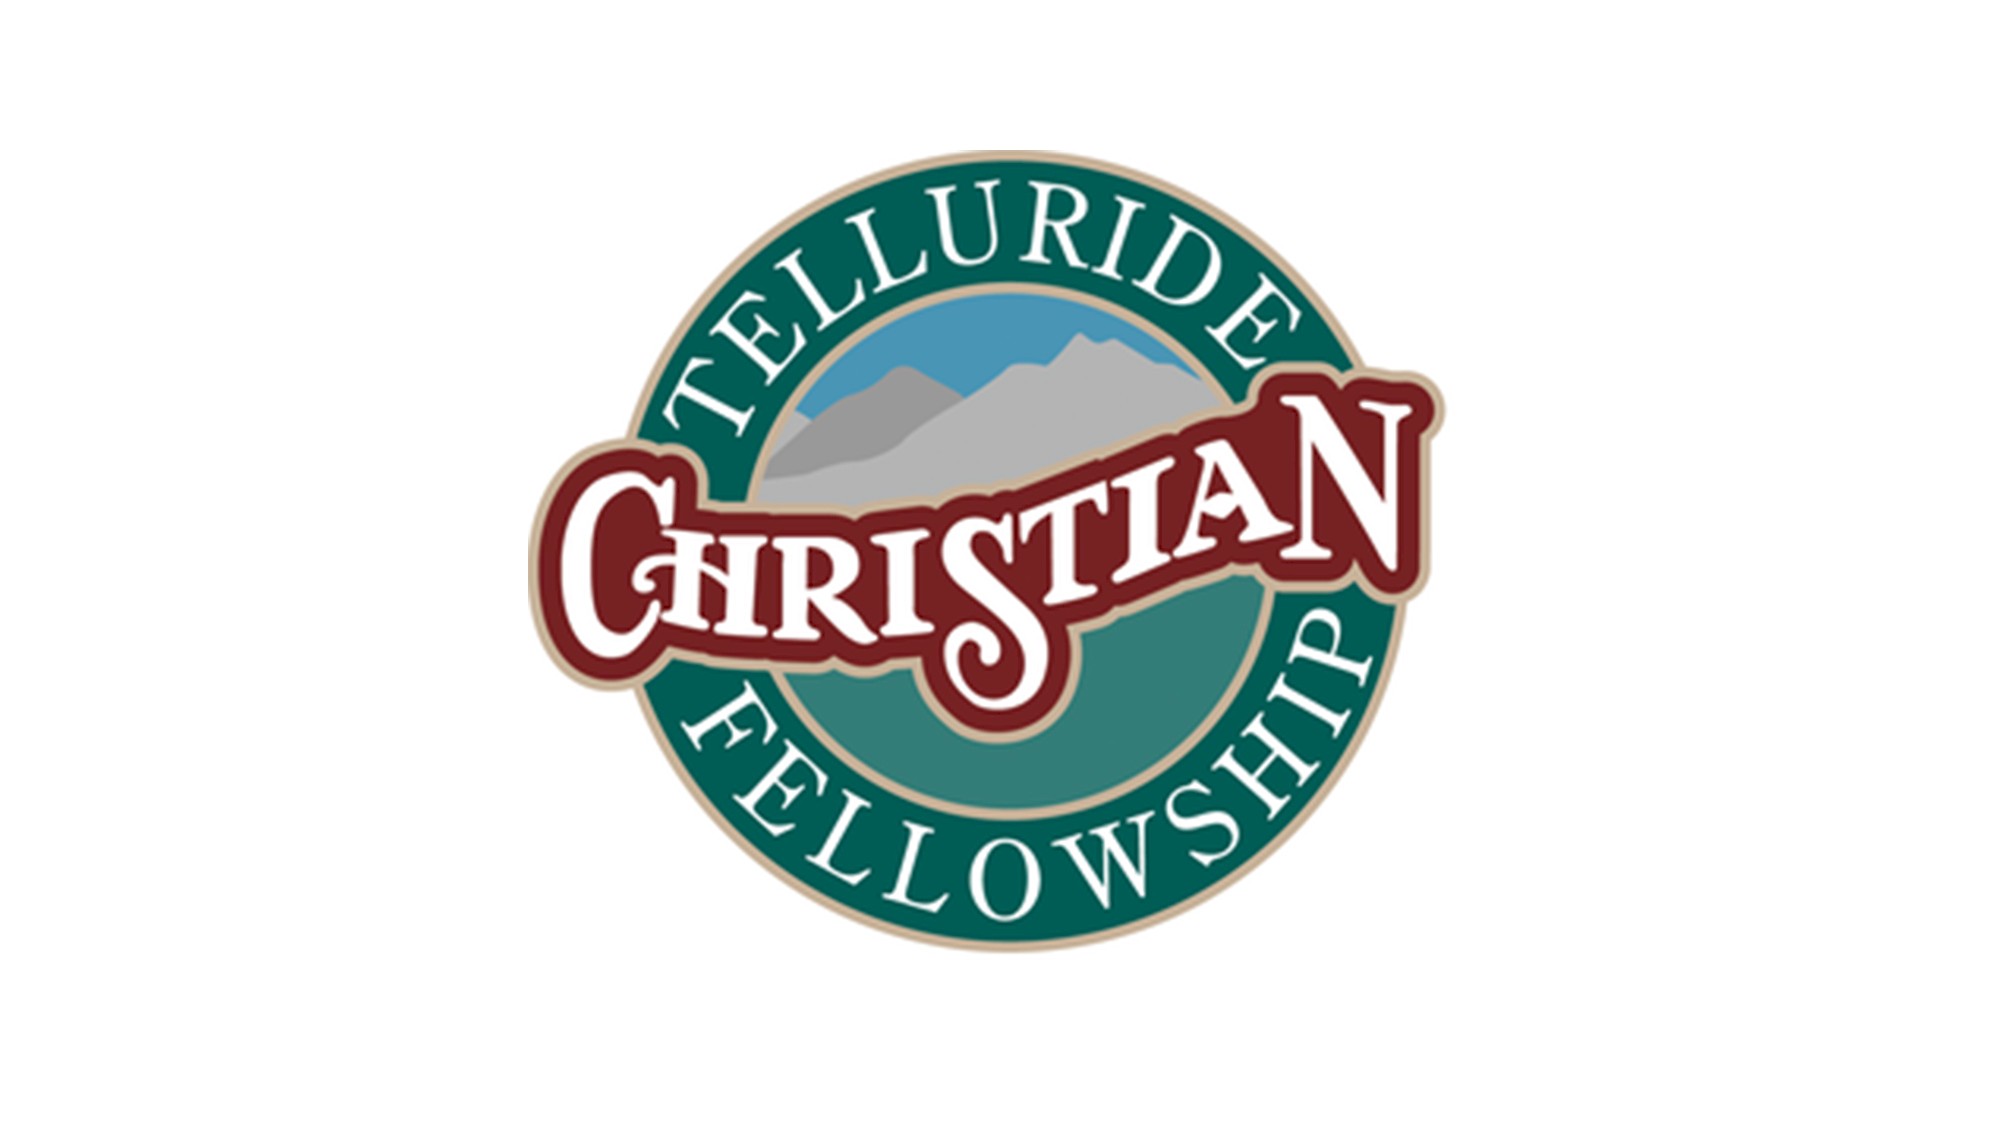 Telluride Christian Fellowship